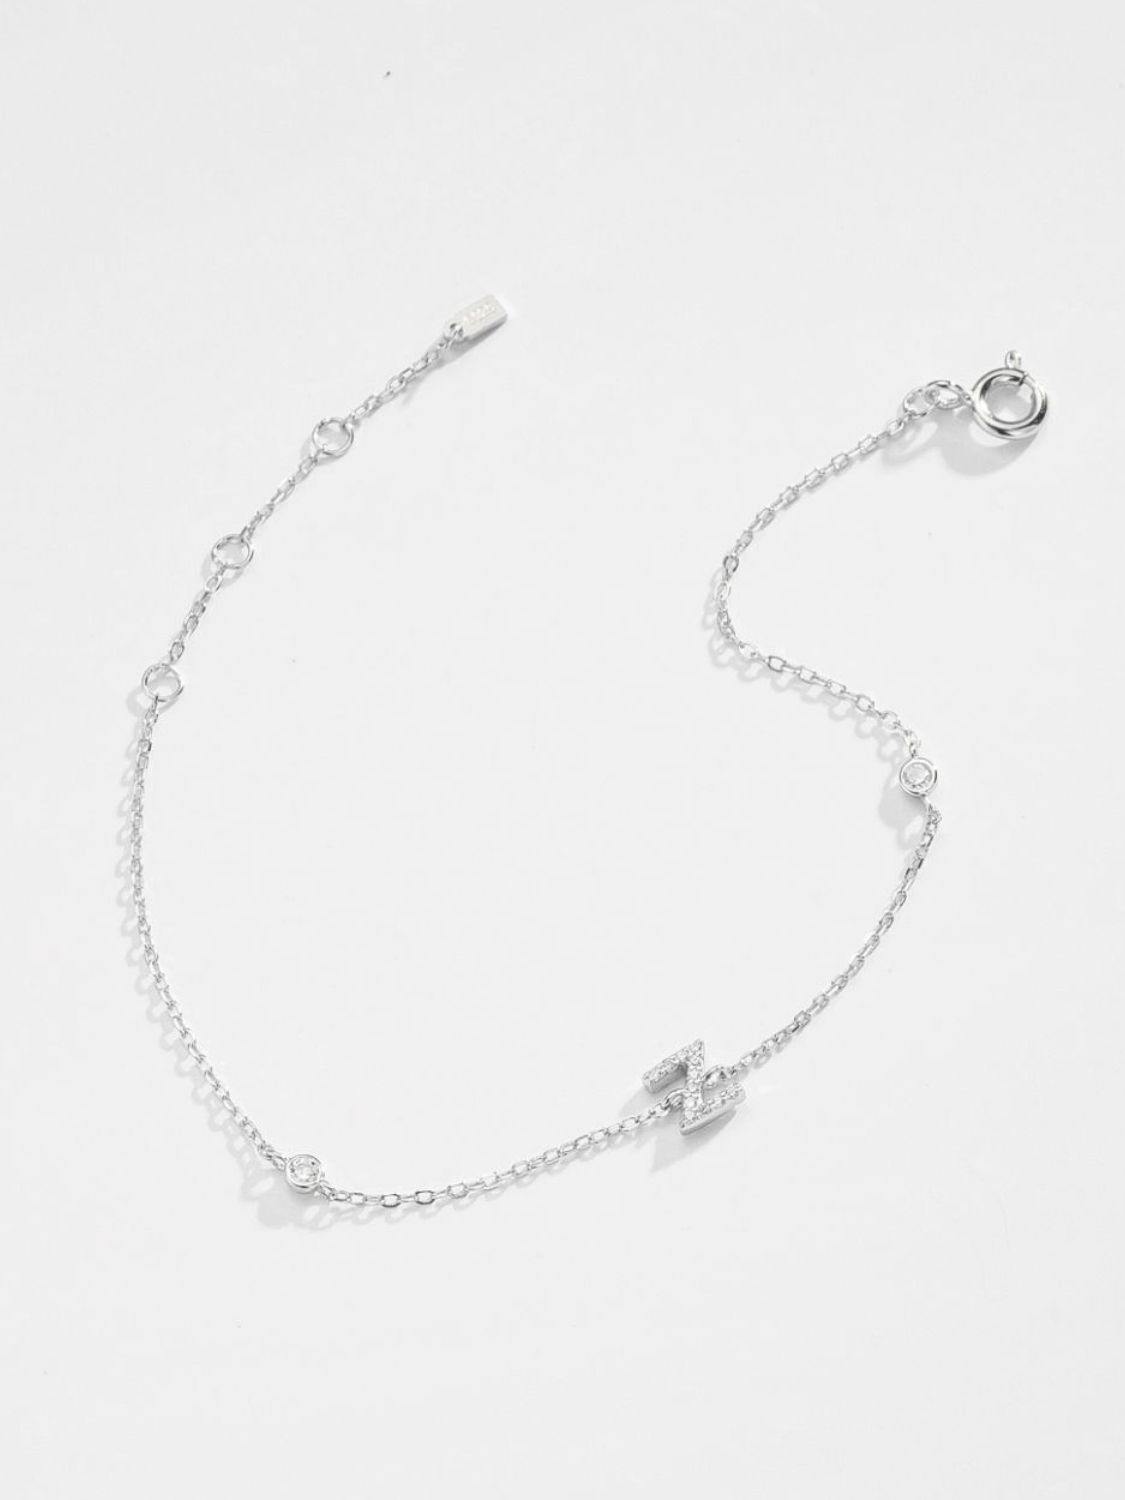 V To Z Zircon 925 Sterling Silver Bracelet - Women’s Jewelry - Bracelets - 29 - 2024